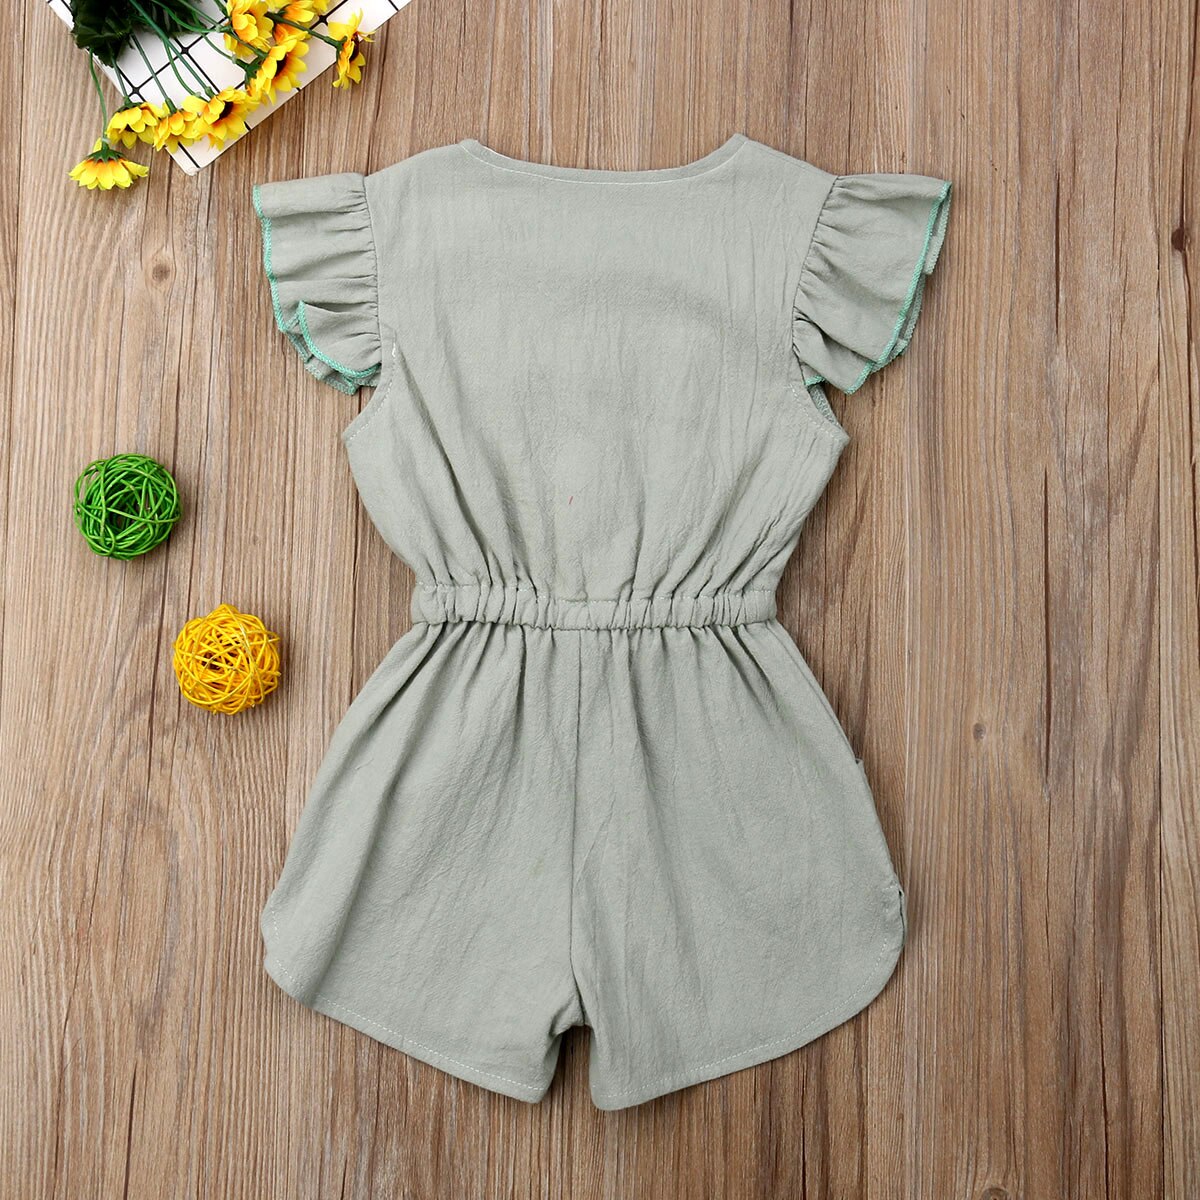 Kids Baby Girls Summer Bib pants Short Sleeve Infant Overalls Jumpsuit Toddler Clothes Sunsuit - ebowsos